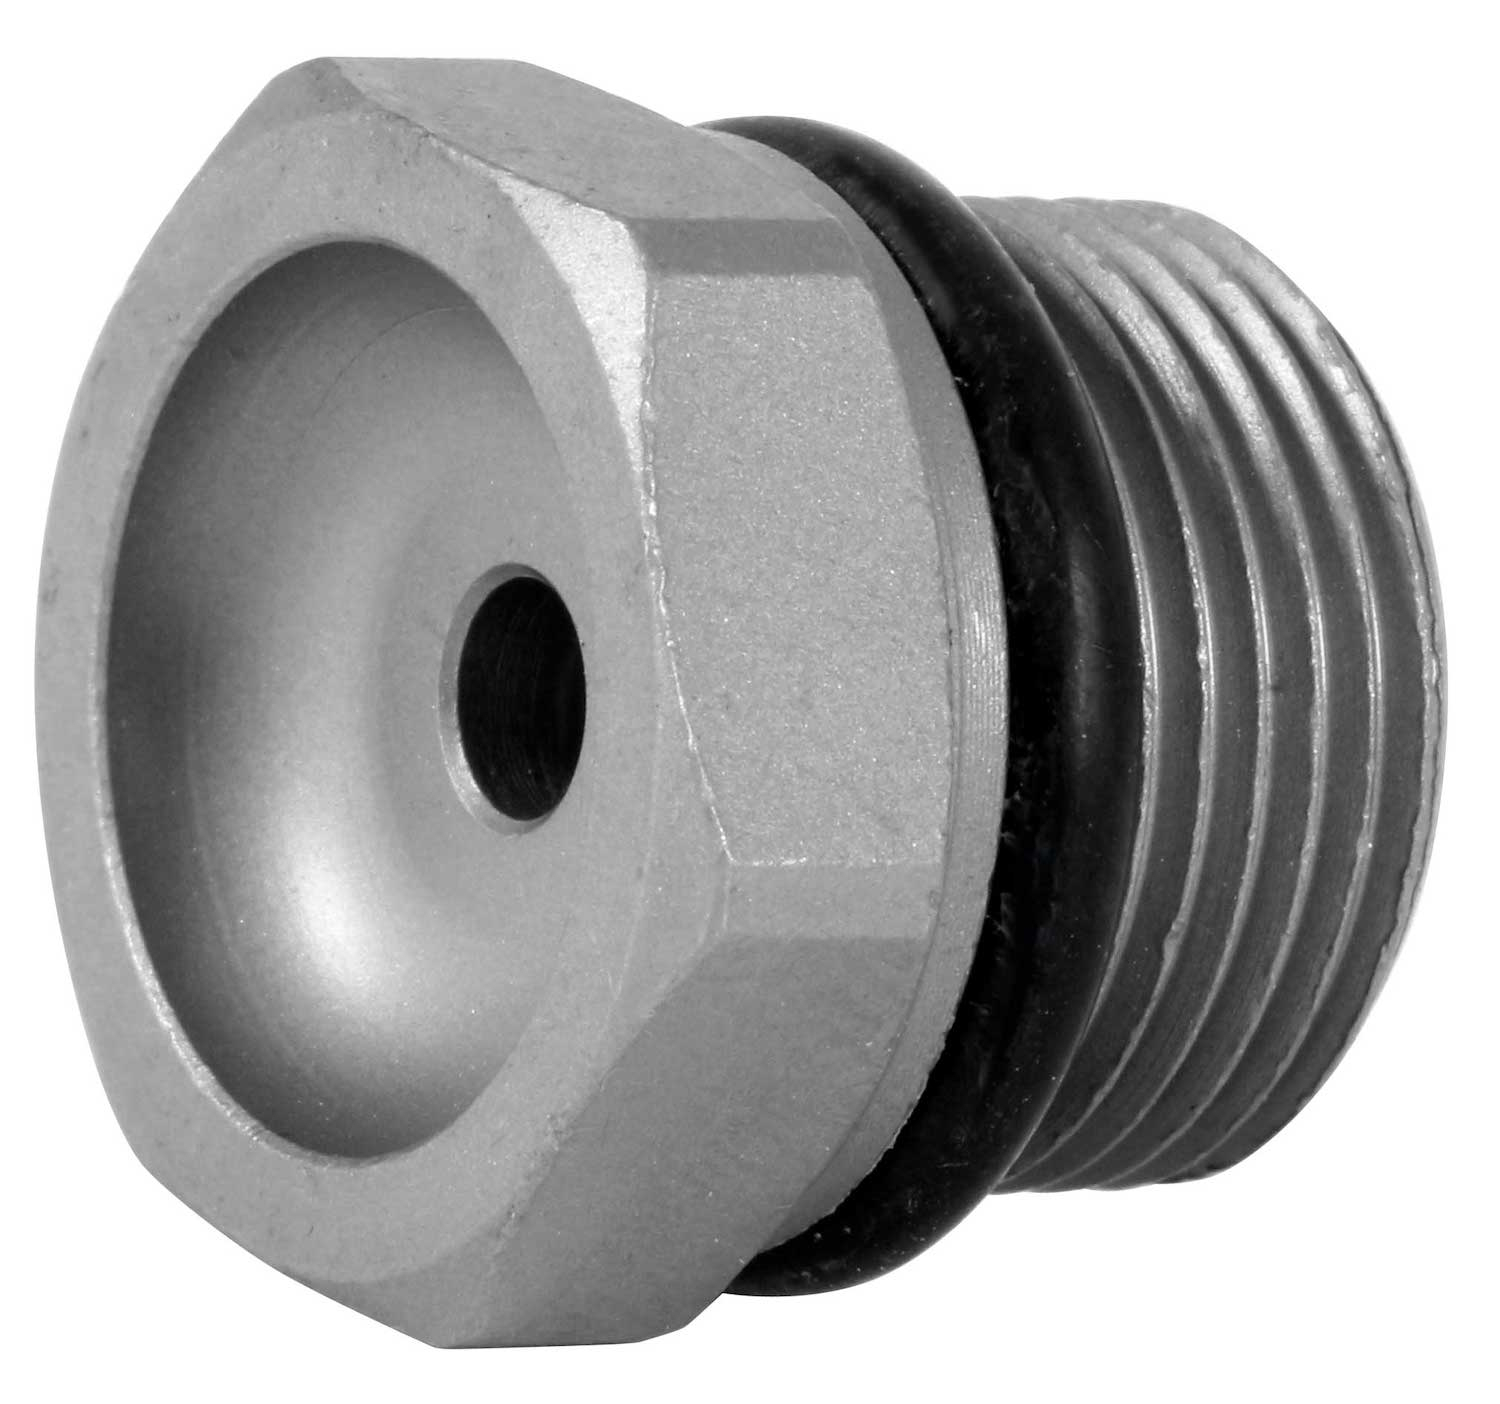 Buse inox pour lance hydro-balayage - calibre 1,5 mm